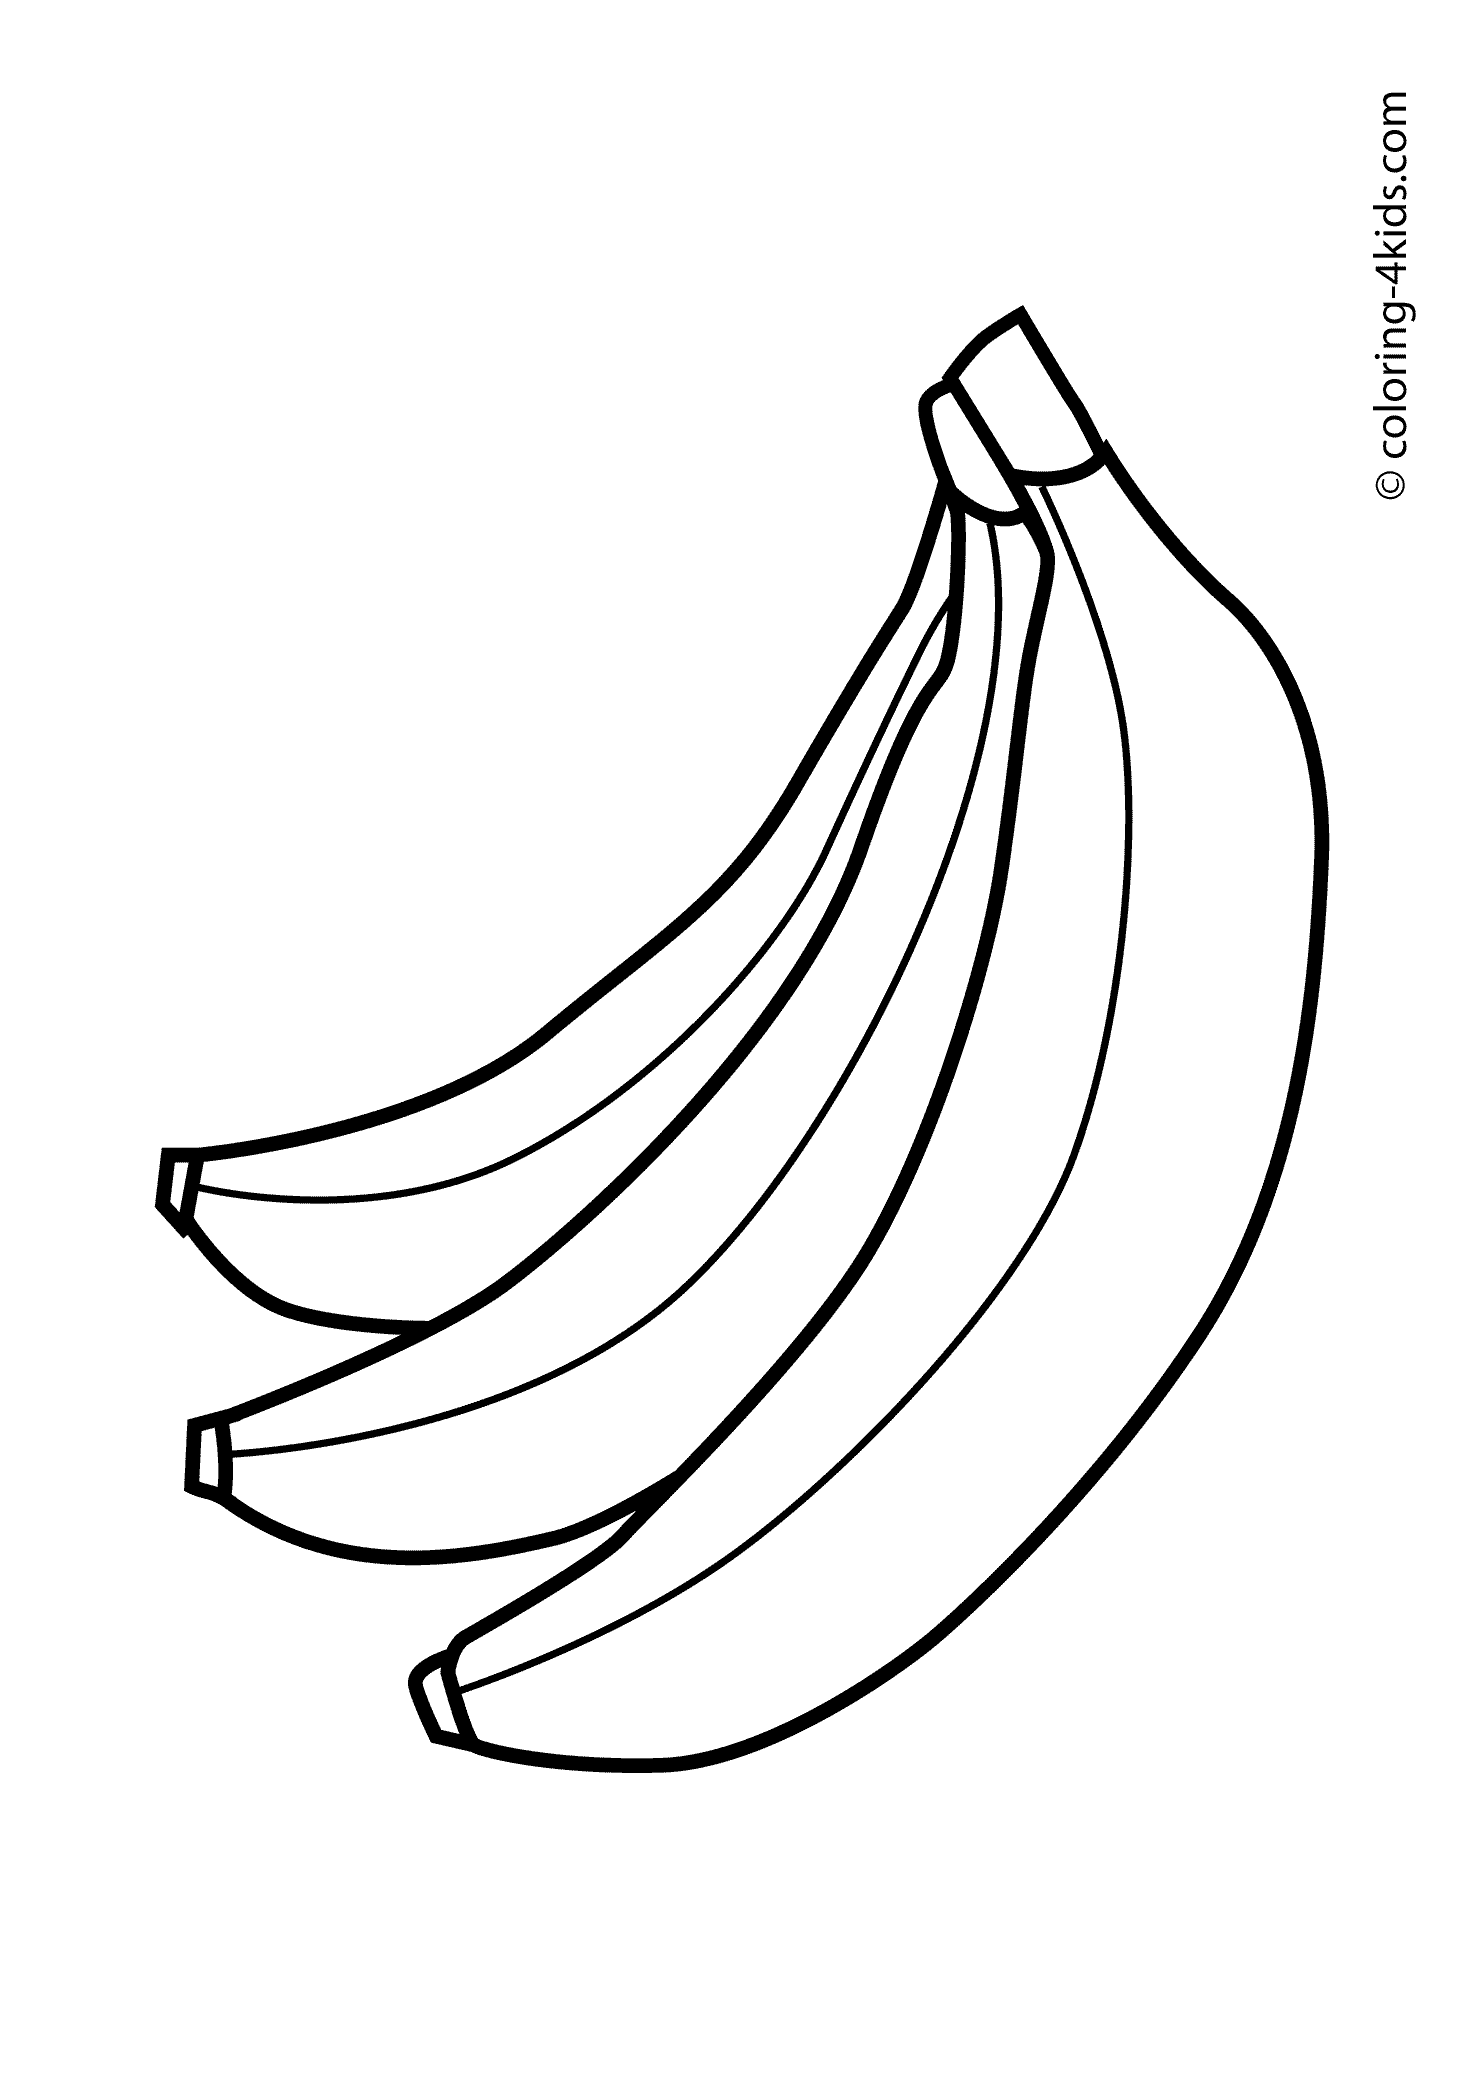 Banana Drawing Outline at GetDrawings | Free download